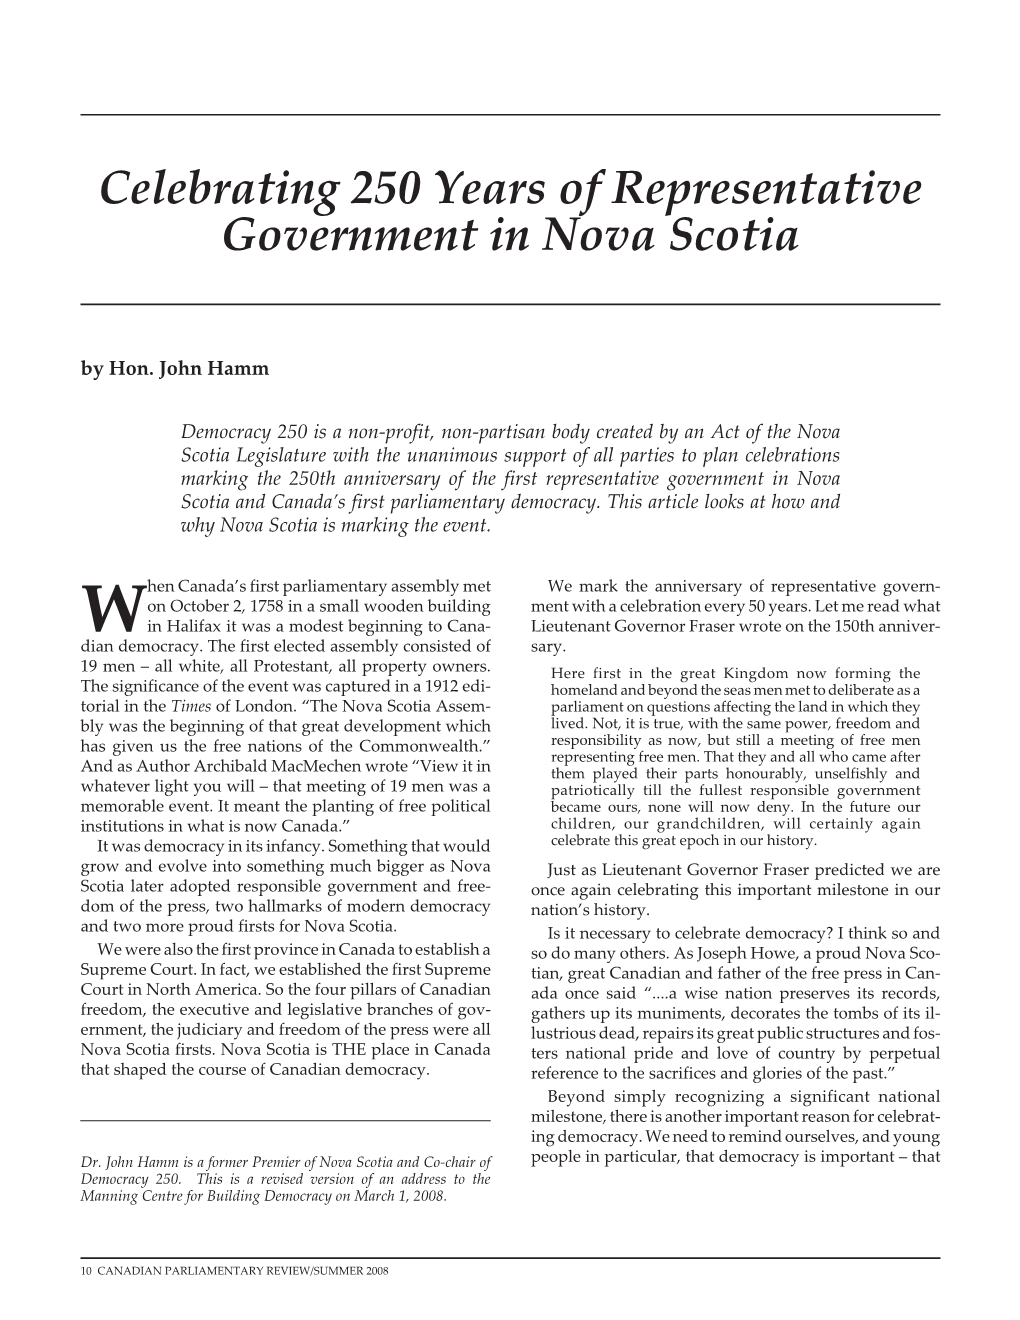 Celebrating 250 Years of Representative Government in Nova Scotia